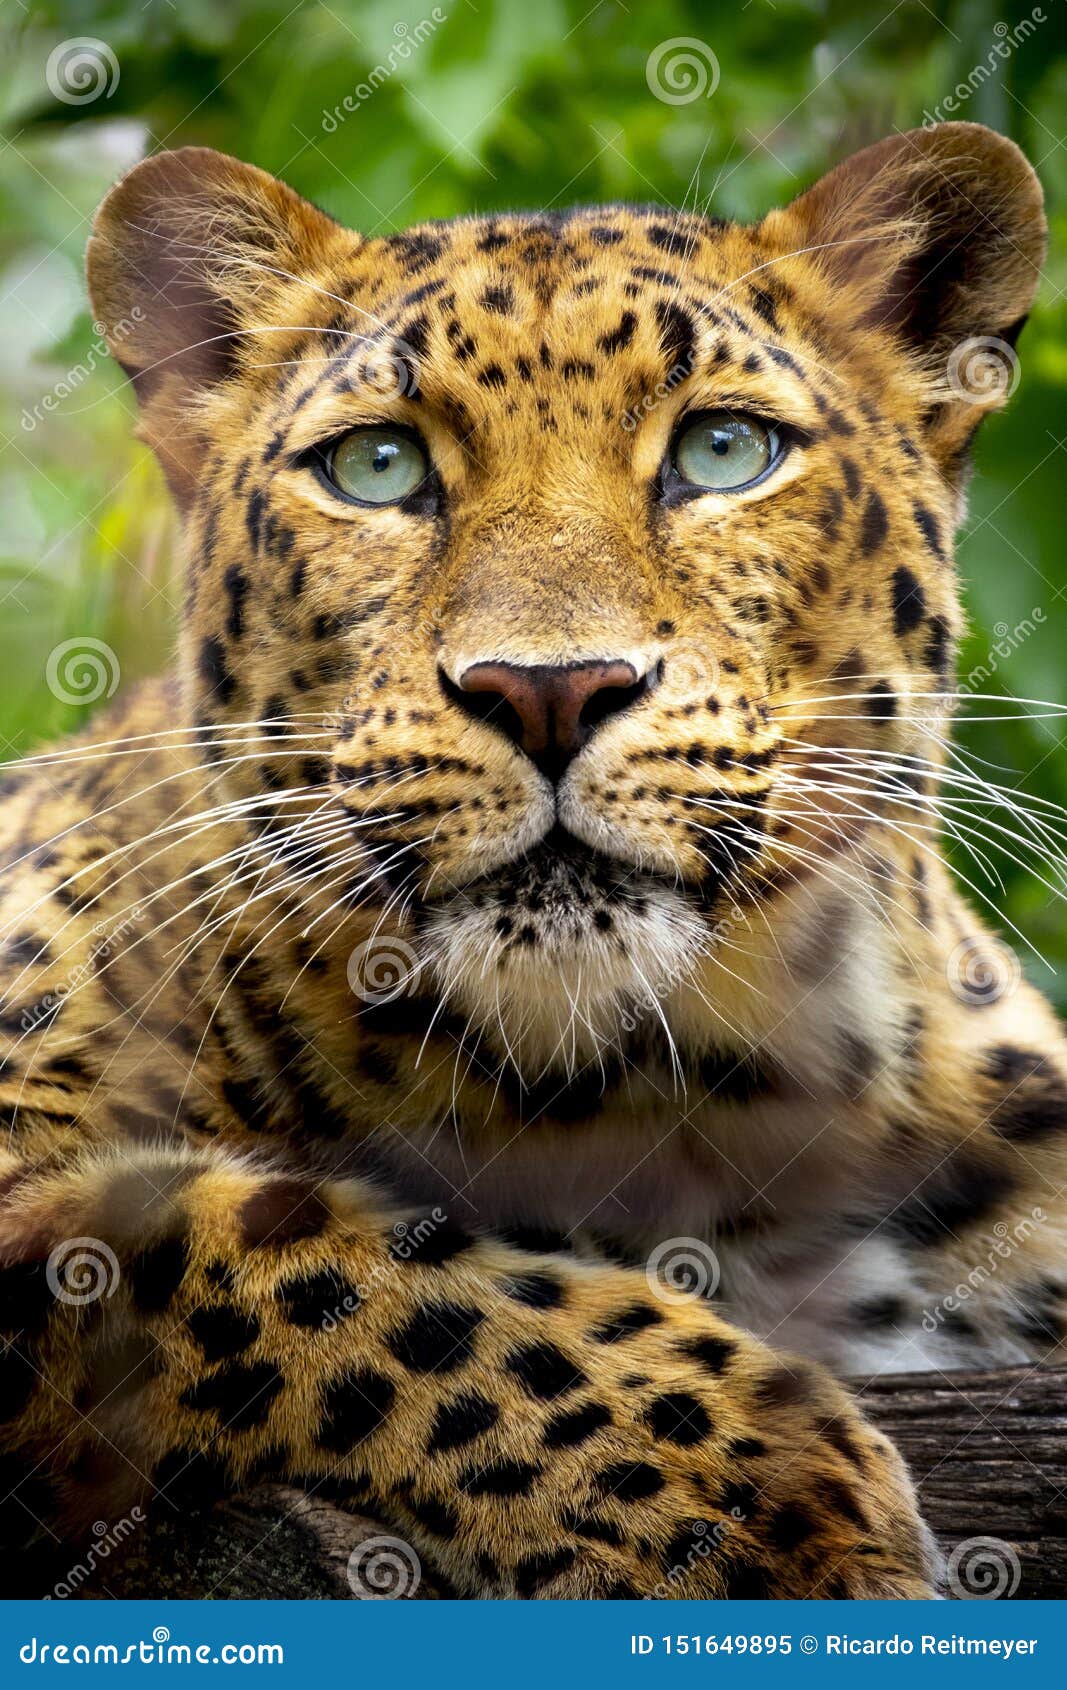 beautiful close up portrait of an endangered amur leopard